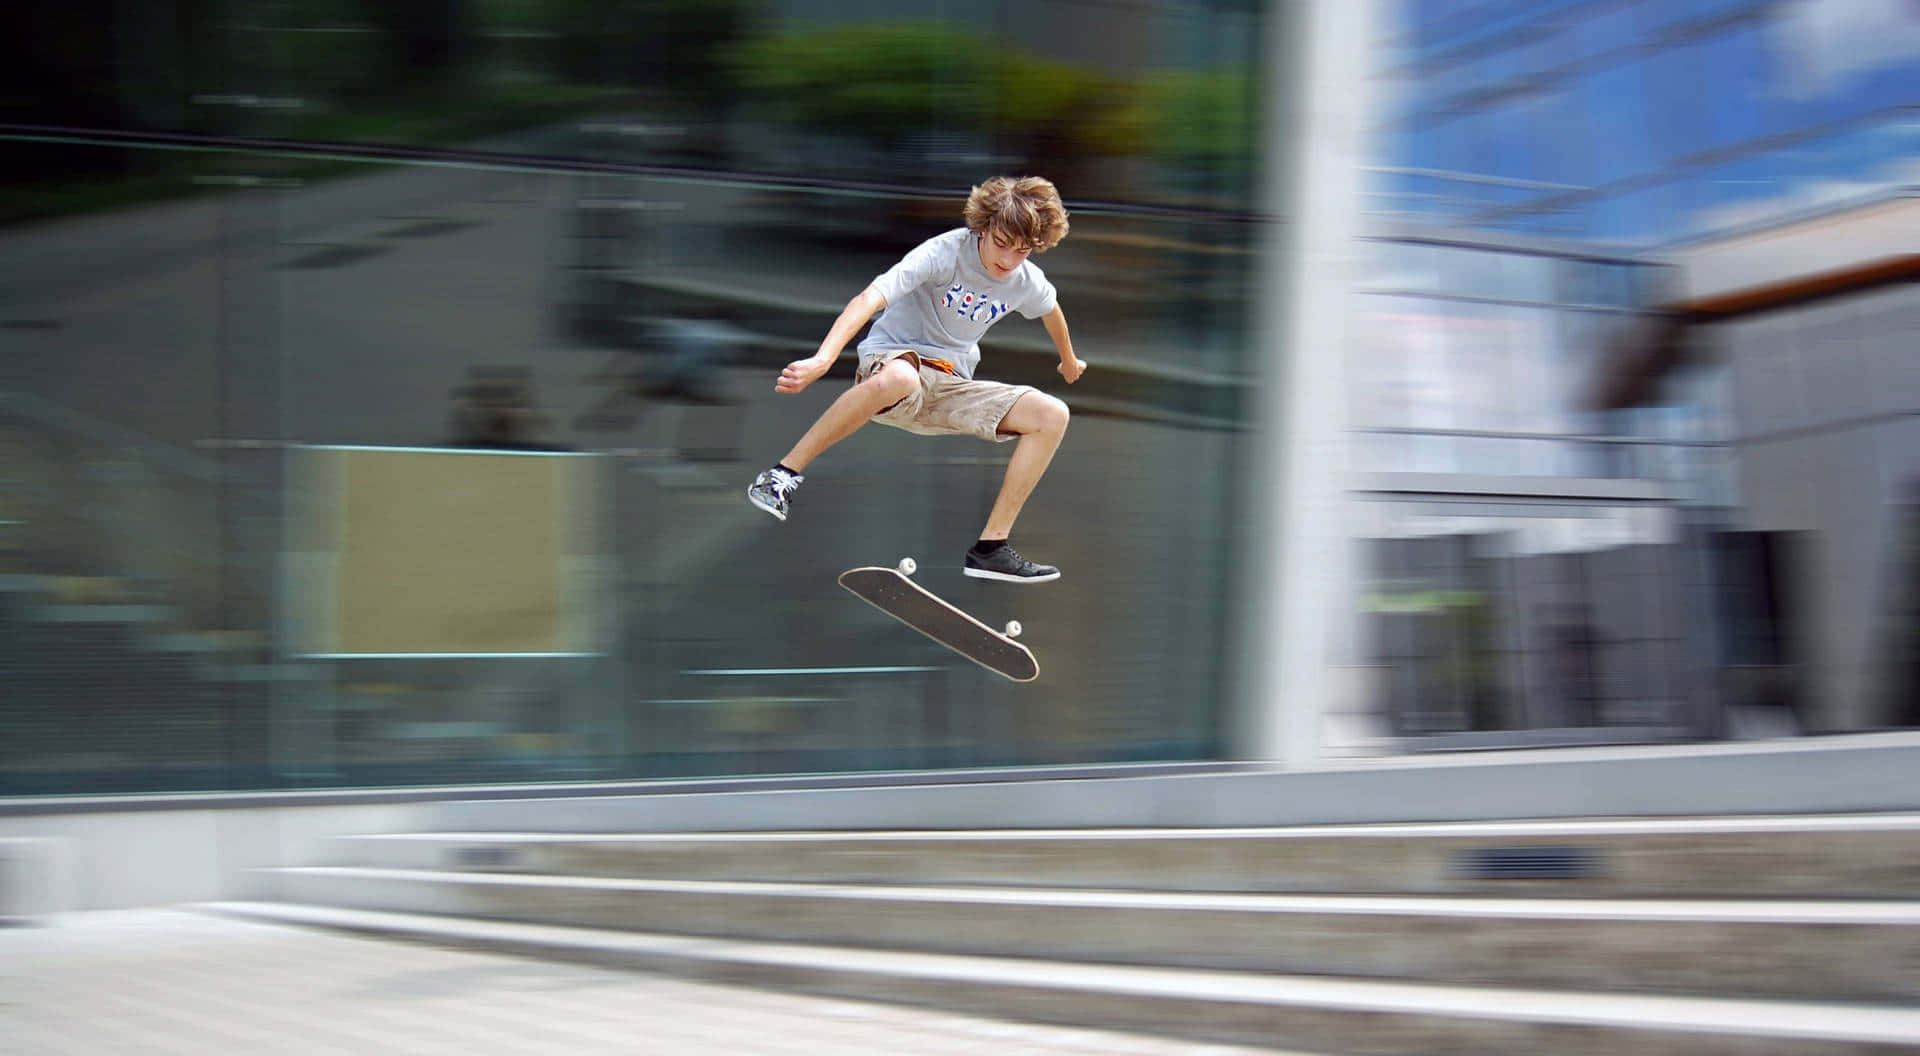 Urban Skateboarding Trick.jpg Wallpaper